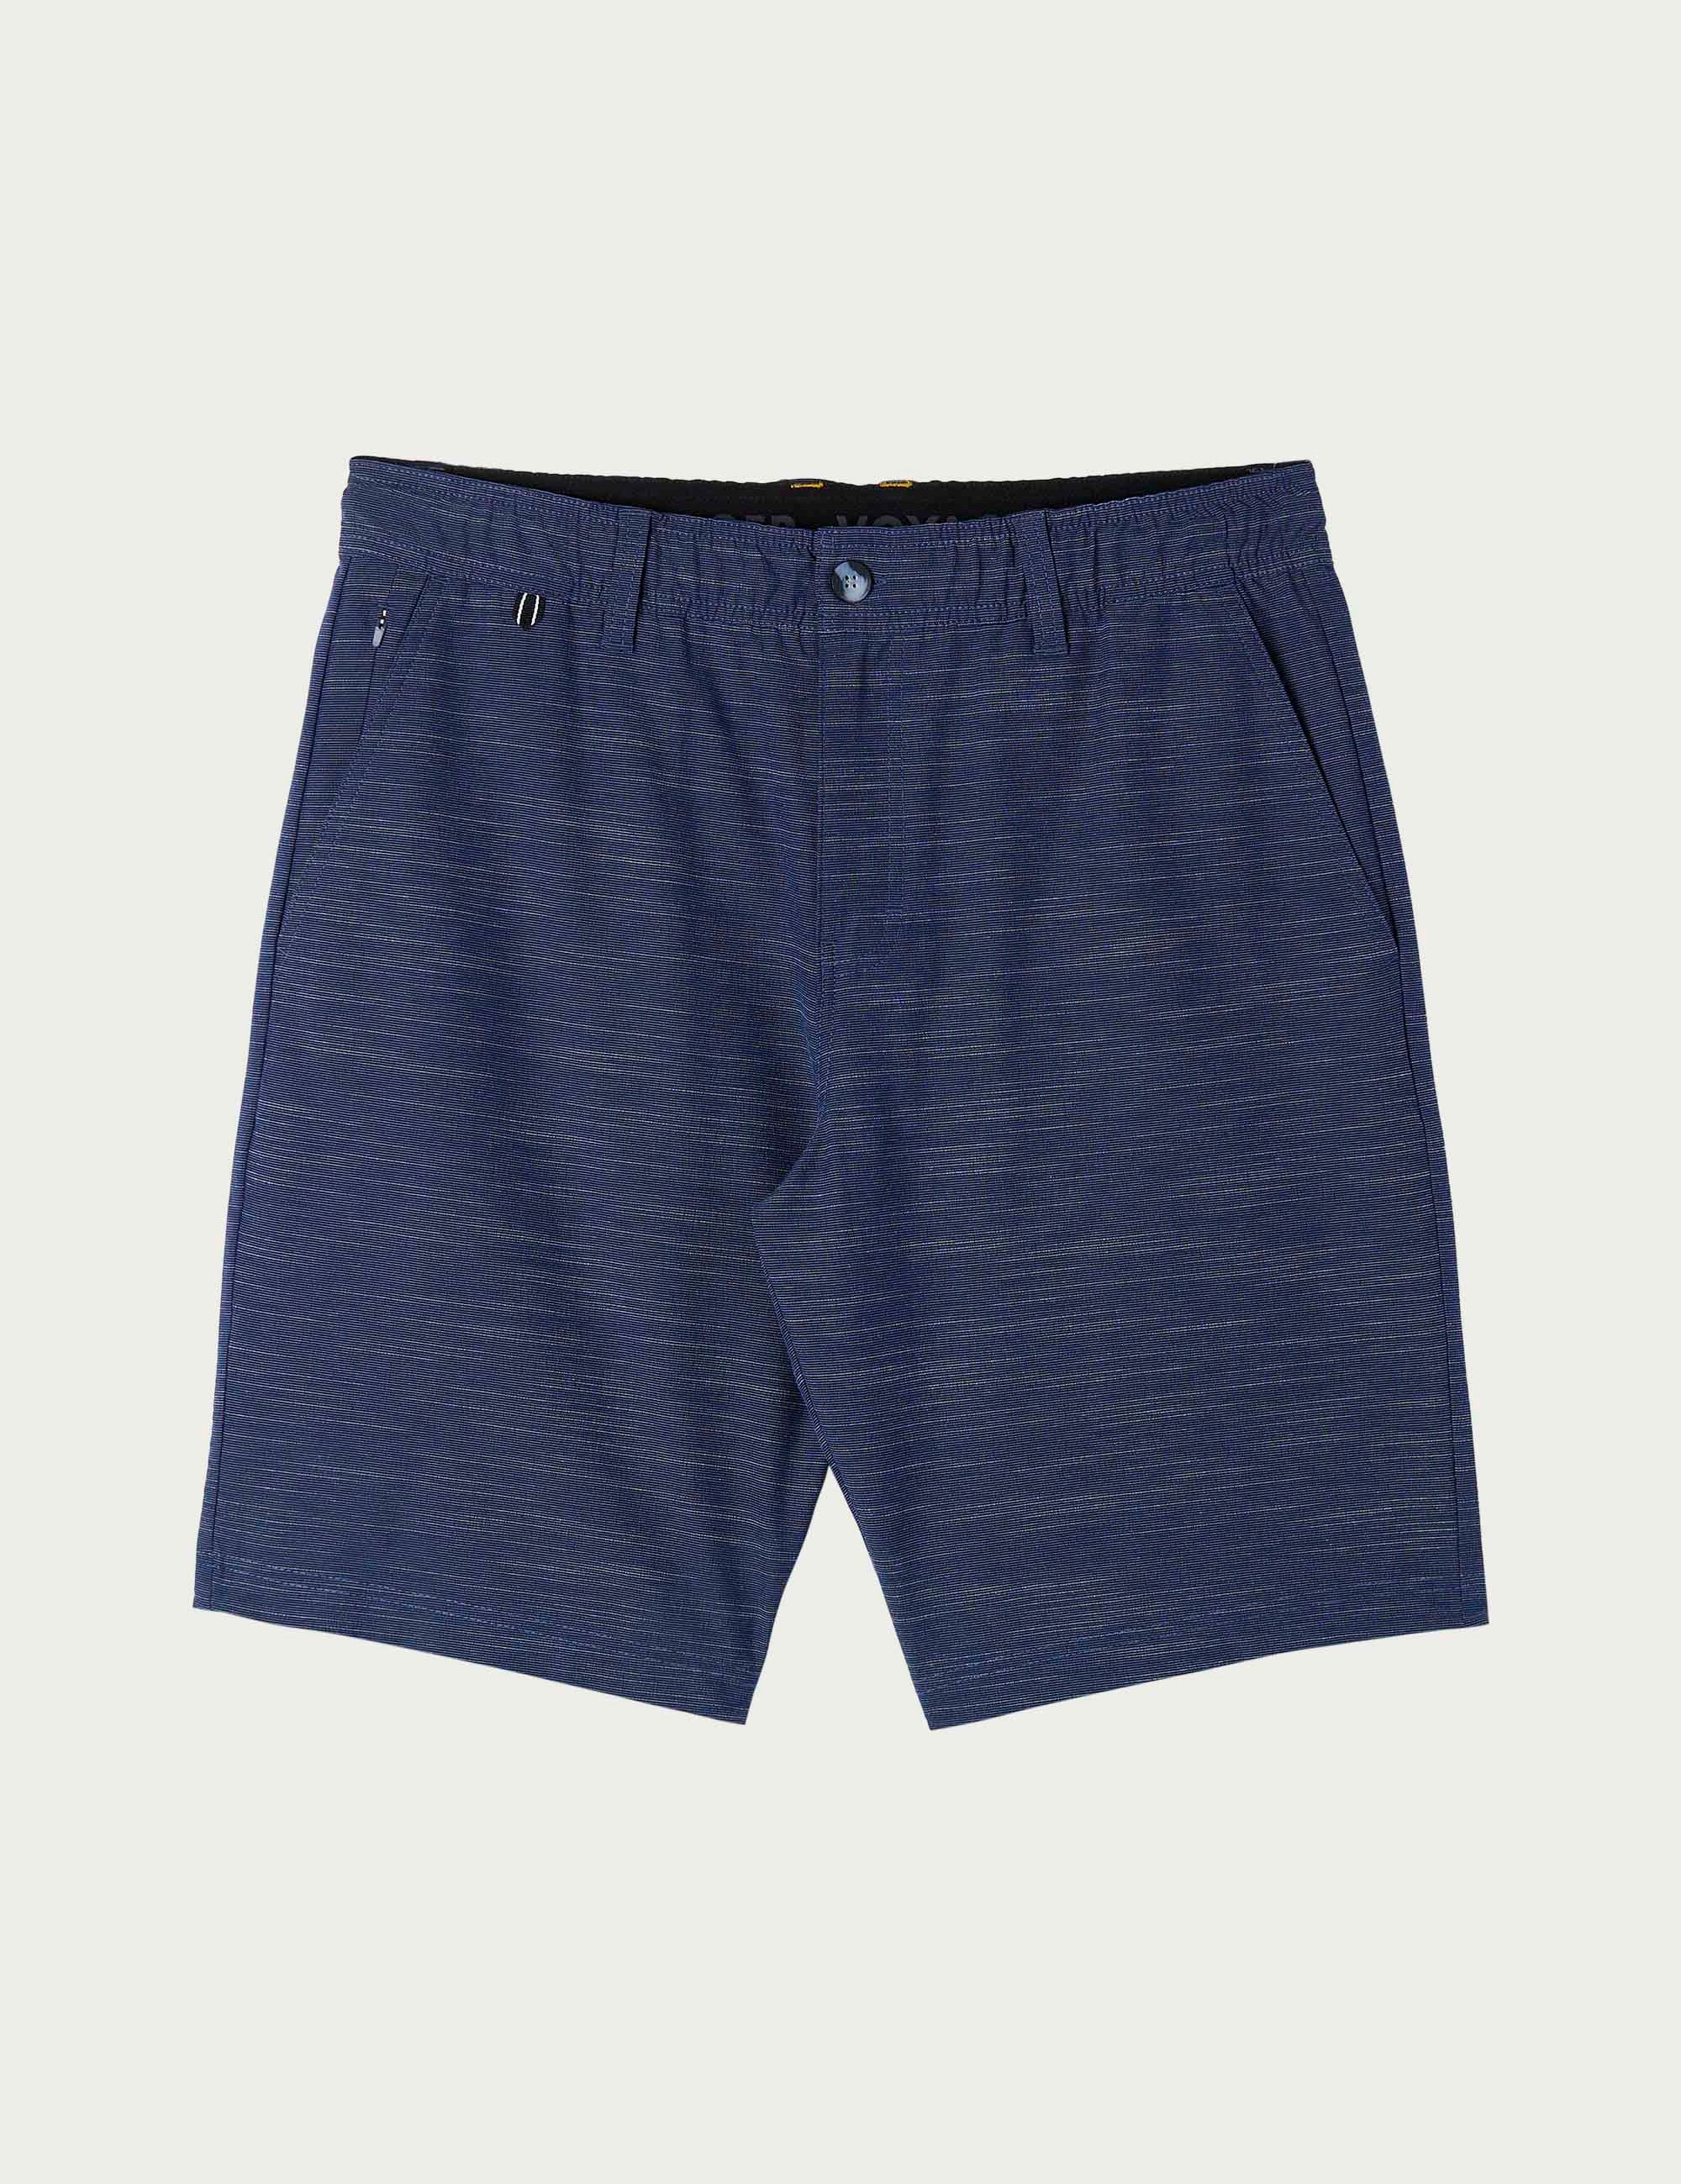 Men's Bottoms - Shorts & Pants | Voyager Goods